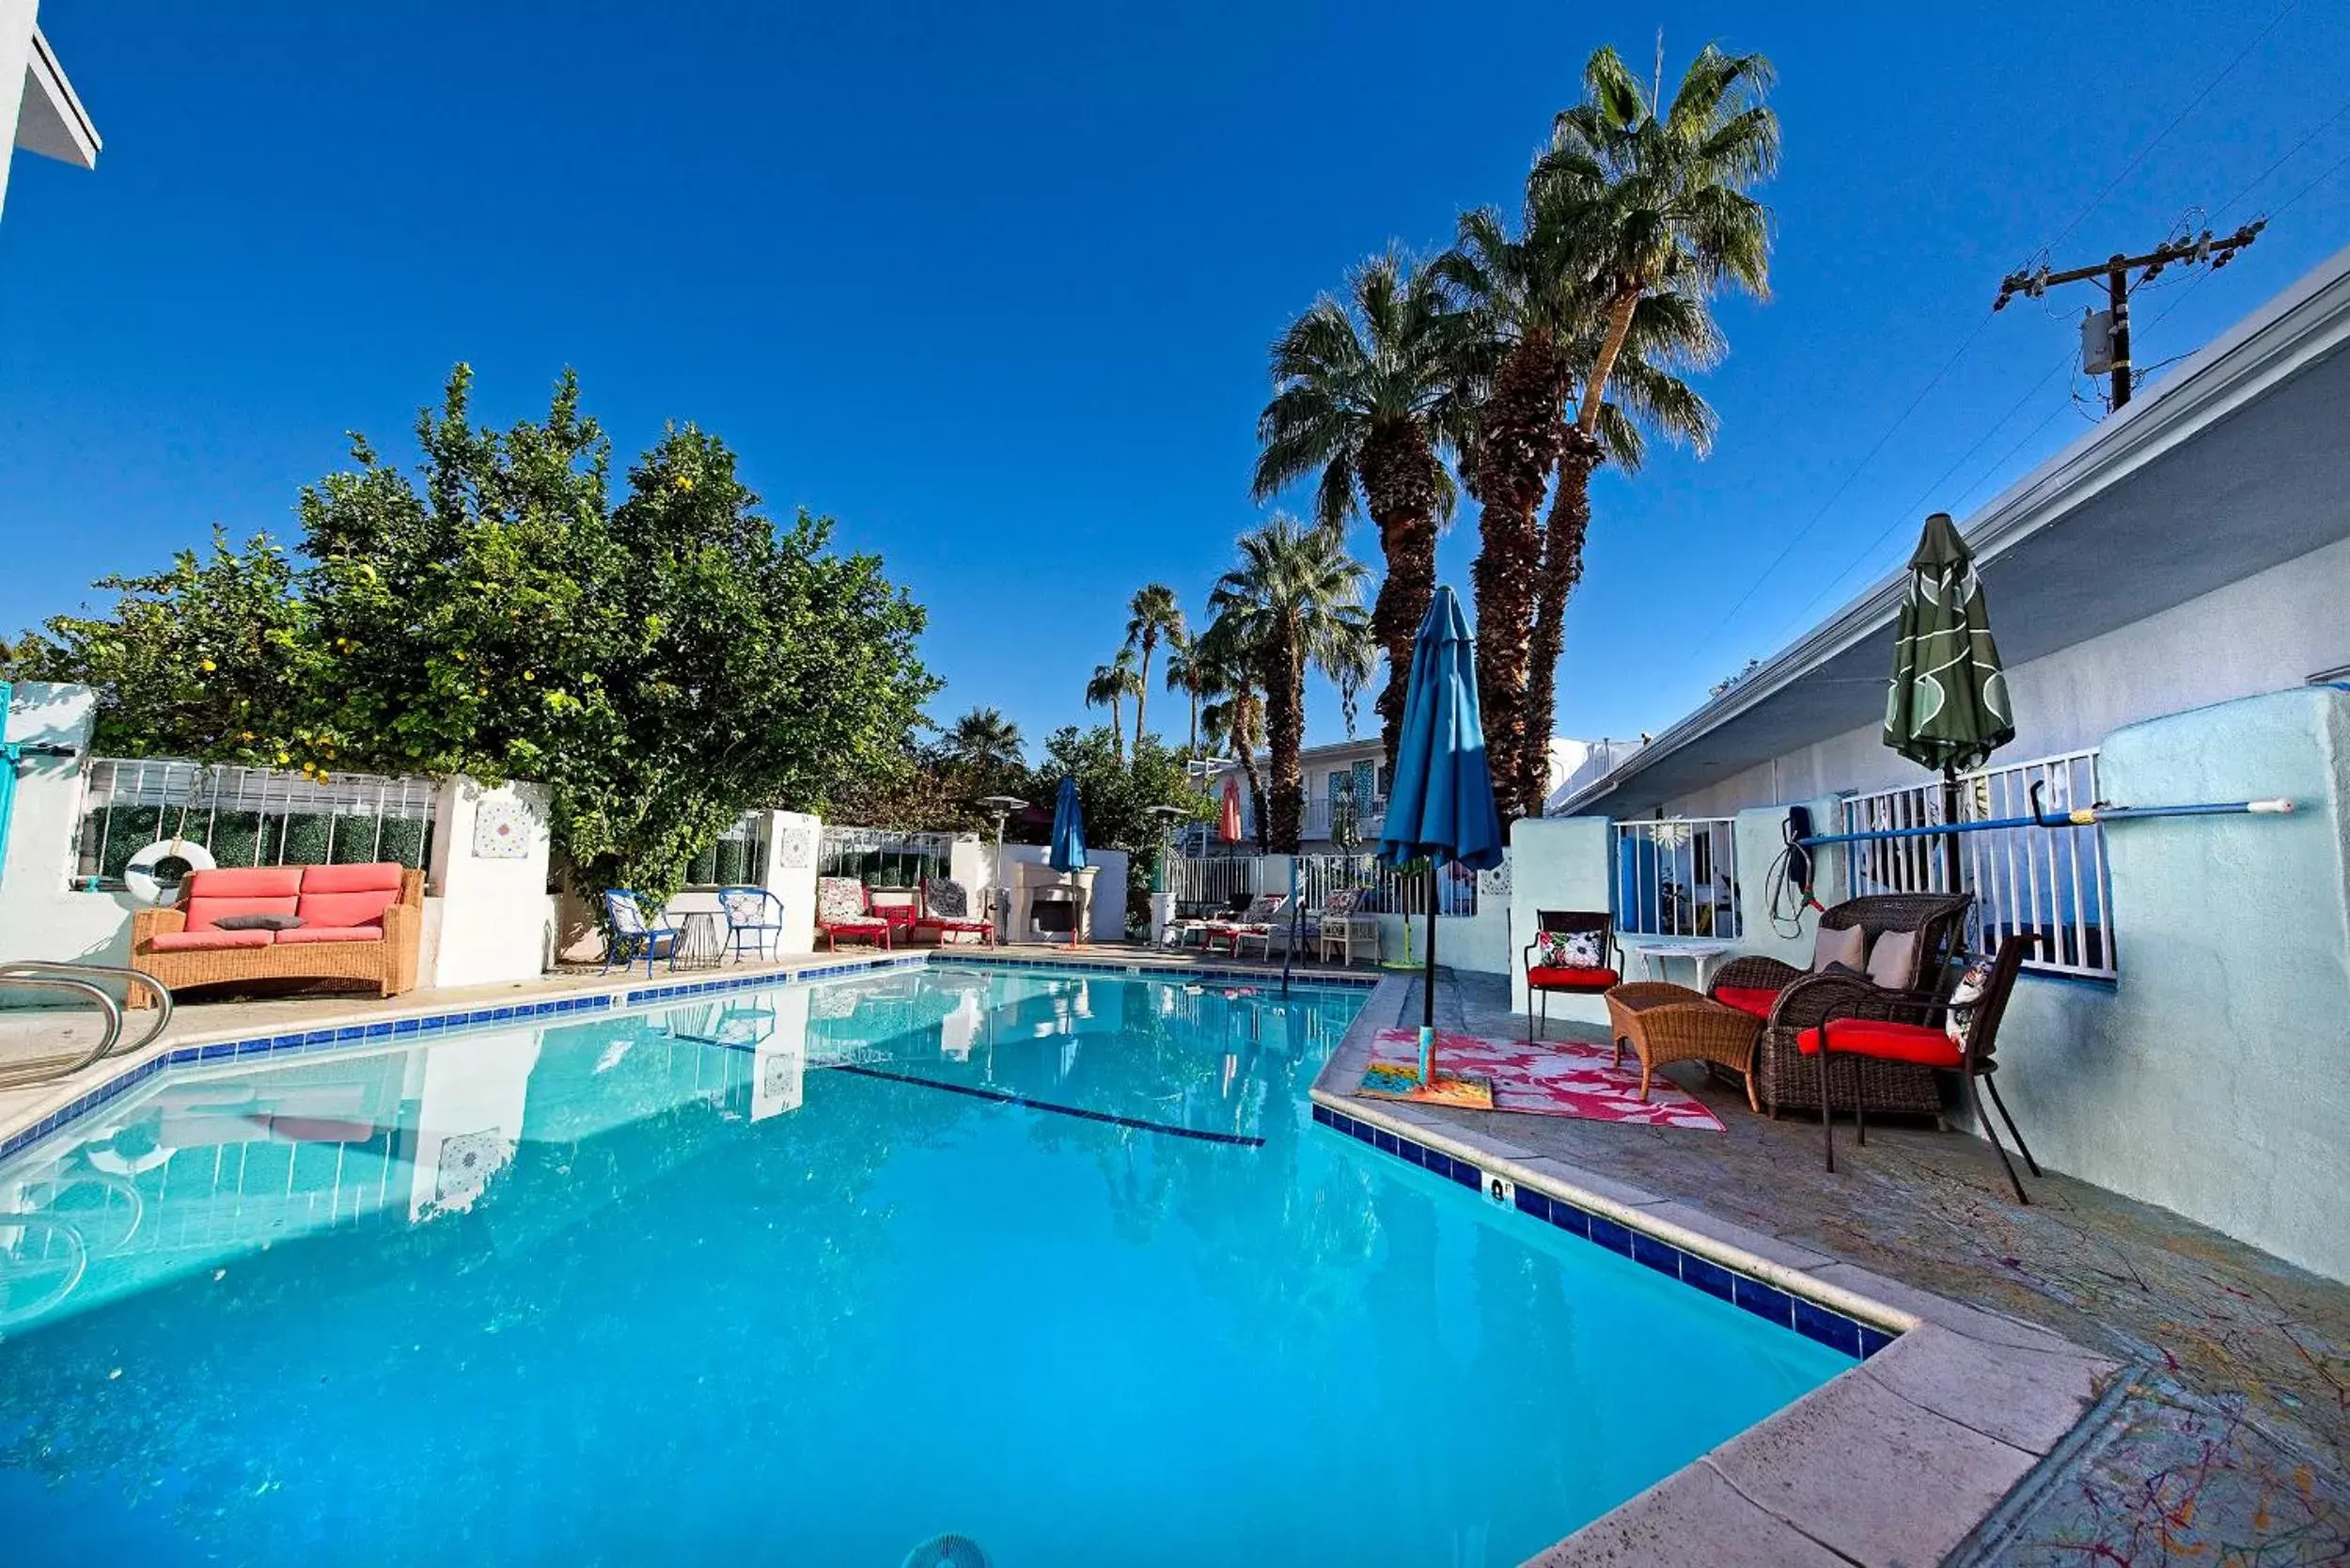 Swimming Pool in Inn at Palm Springs